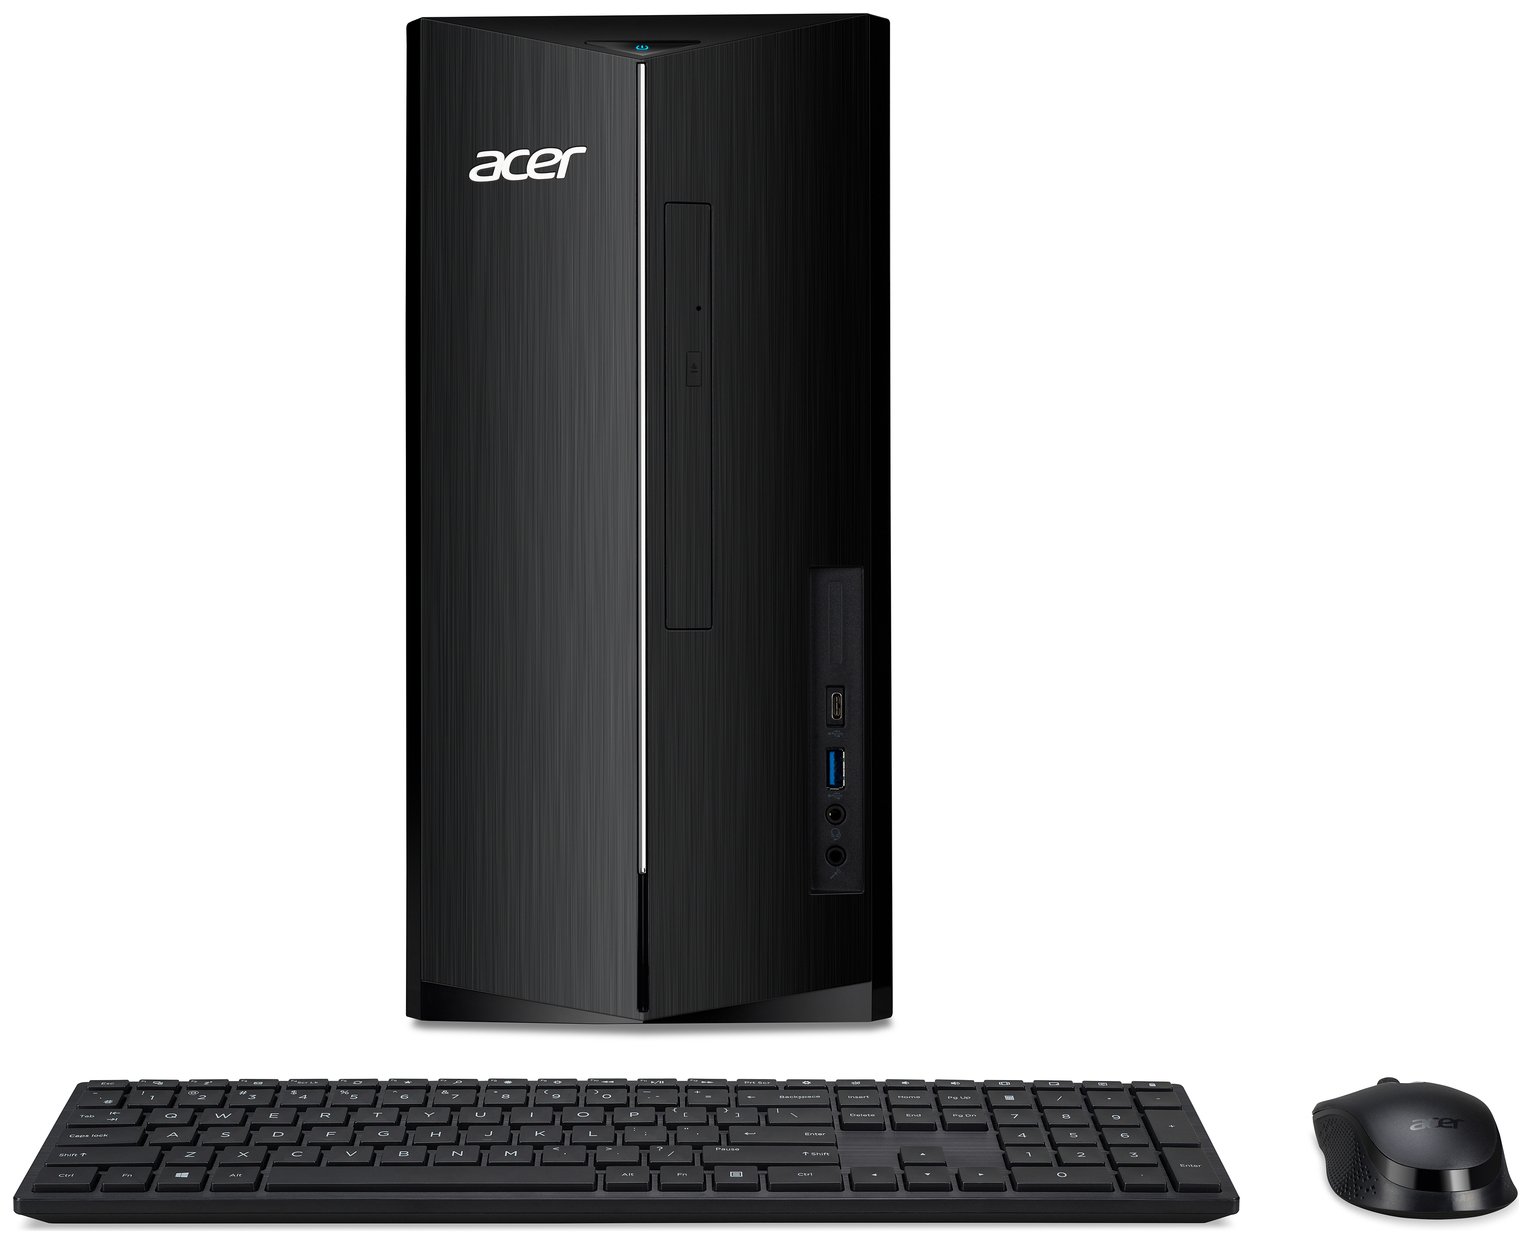 Acer Aspire TC-1760 i5 8GB 2TB Desktop PC